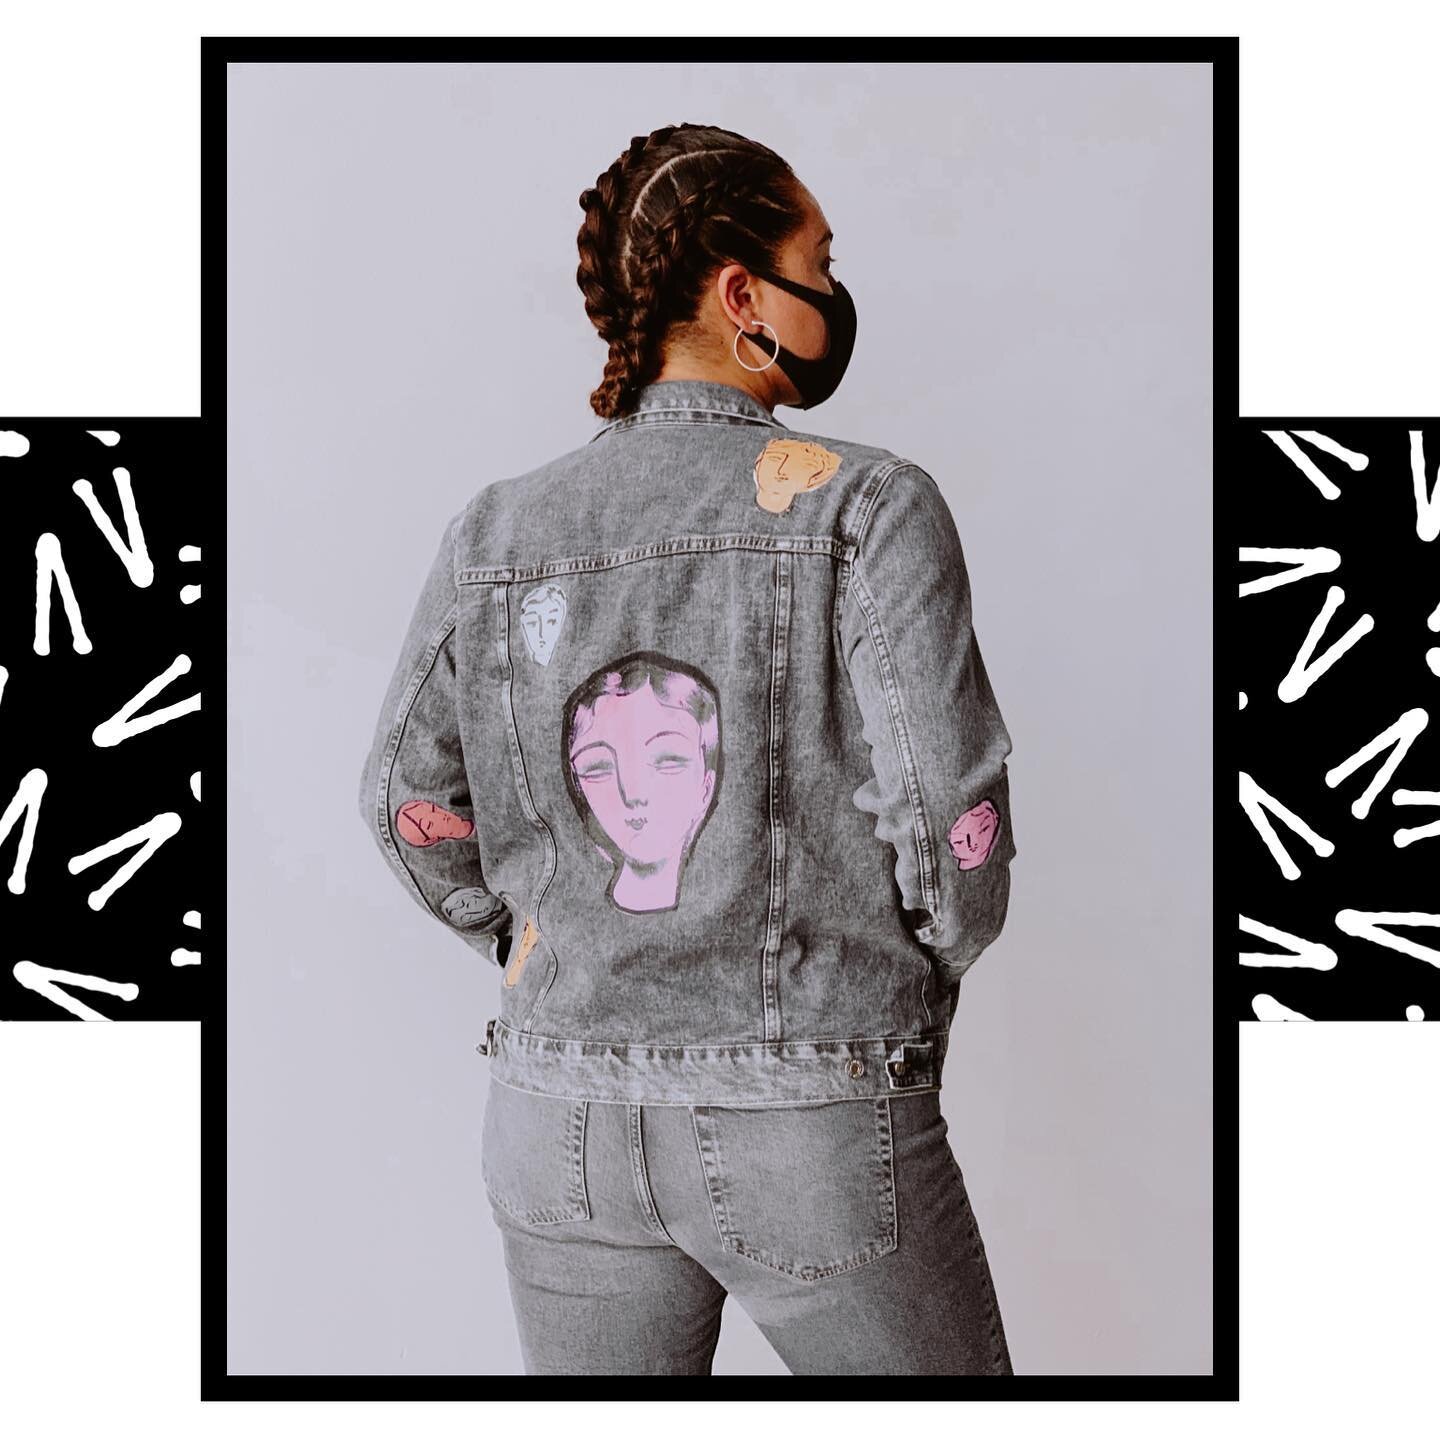 H A I R ✂️ custom M͛U͛C͛H͛O͛ piece by @sofiaenriquez hit her up for your own wearable A R T🖌〰️
.
.
.
.
#hairstylist #crafthairdresser #hairbydama #sebastianpro_northamerica #sebastianartist #coachellavalley #artistsupportartists #supportsmallbusines